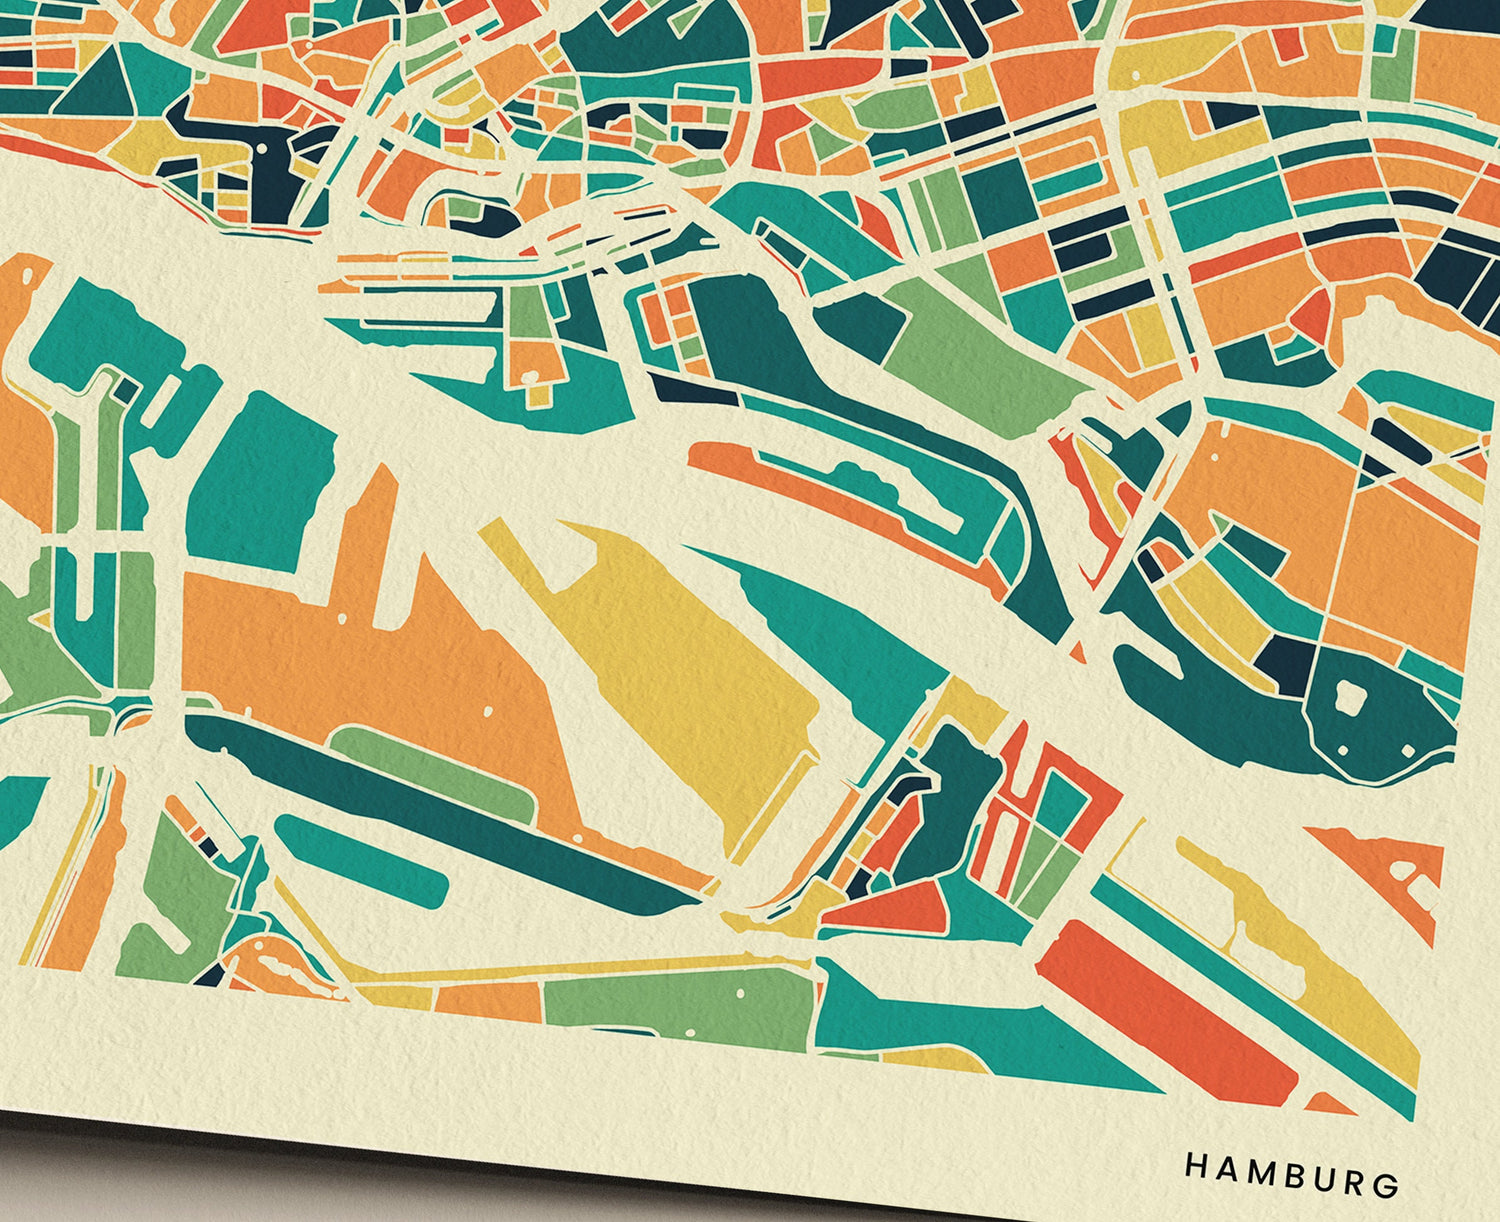 Hamburg Abstract Artistic Map - Modern Home Decor Wall Art